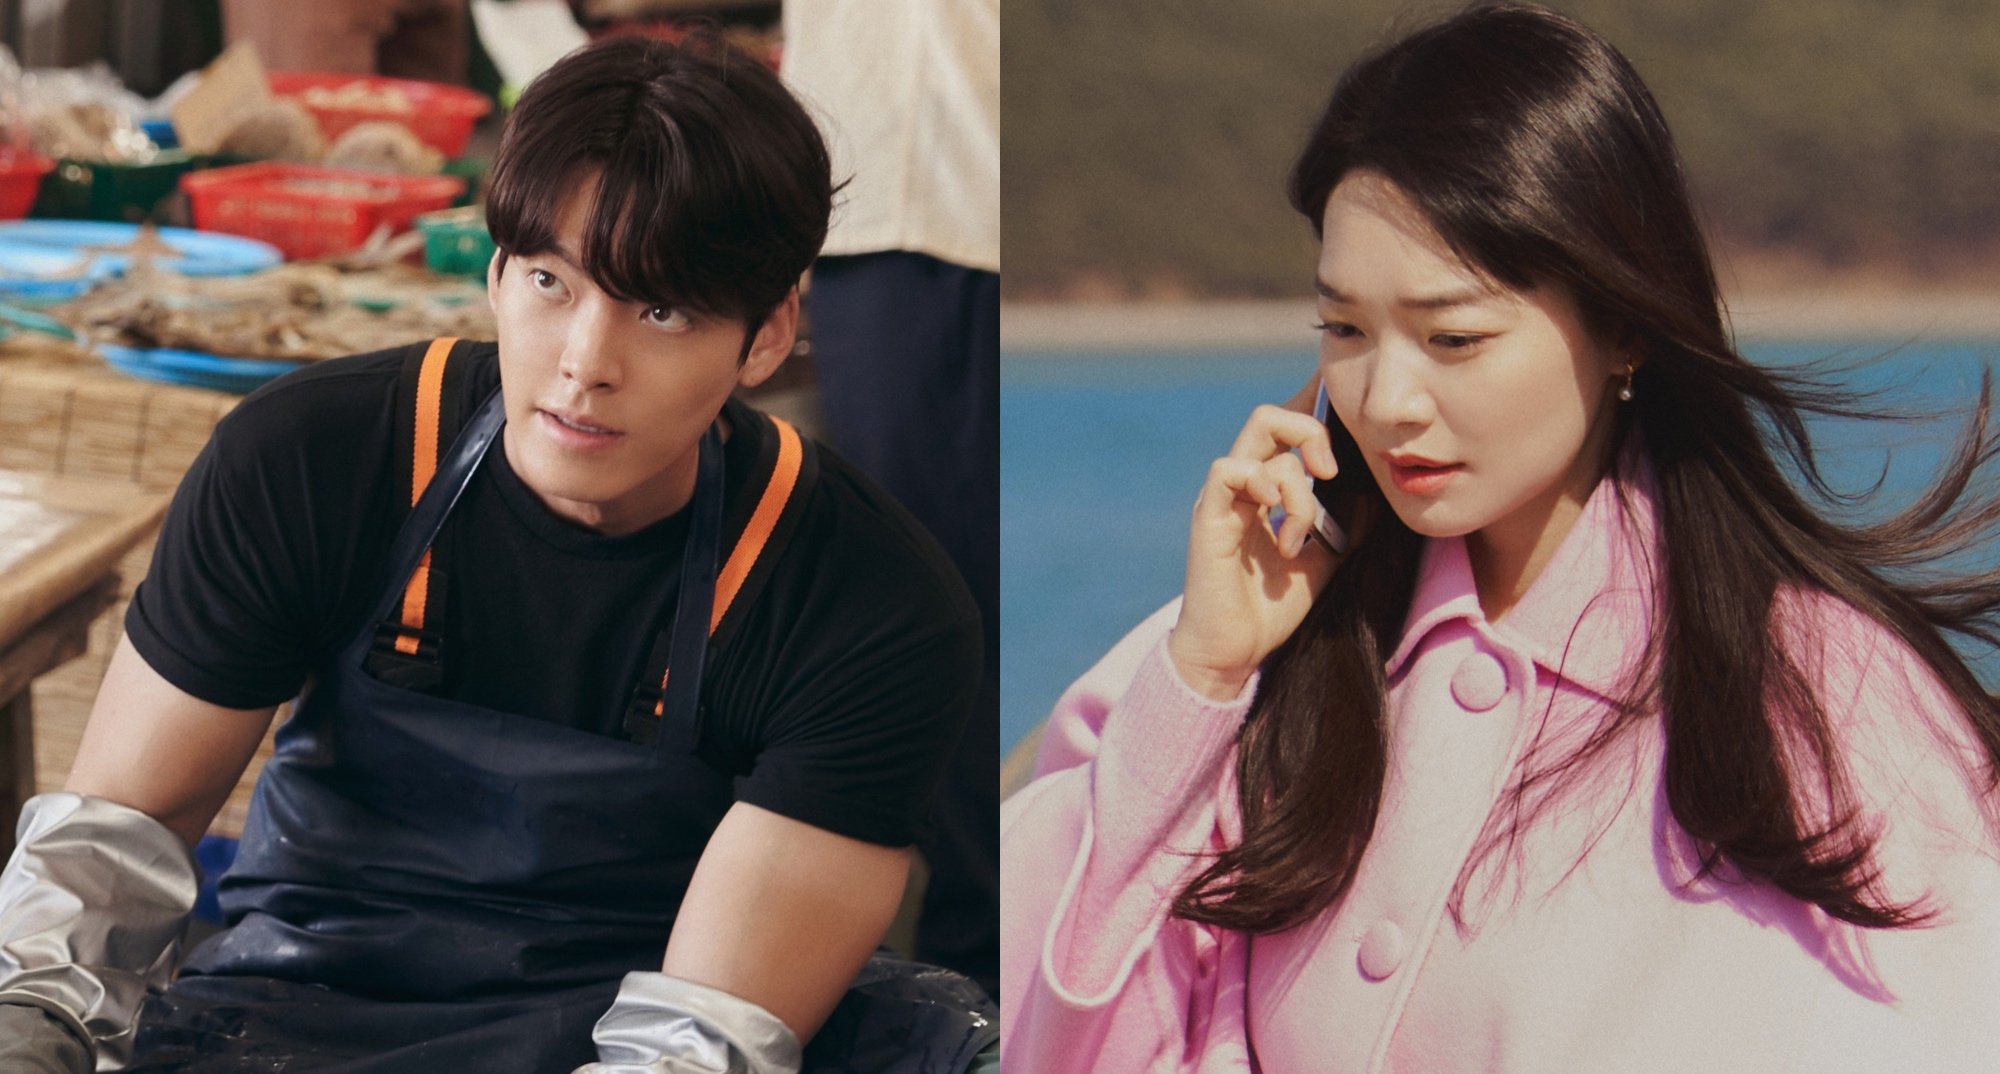 Kim Woo-bin and Shin Min-ah for 'Our Blues' K-drama wearing apron and pink coat.